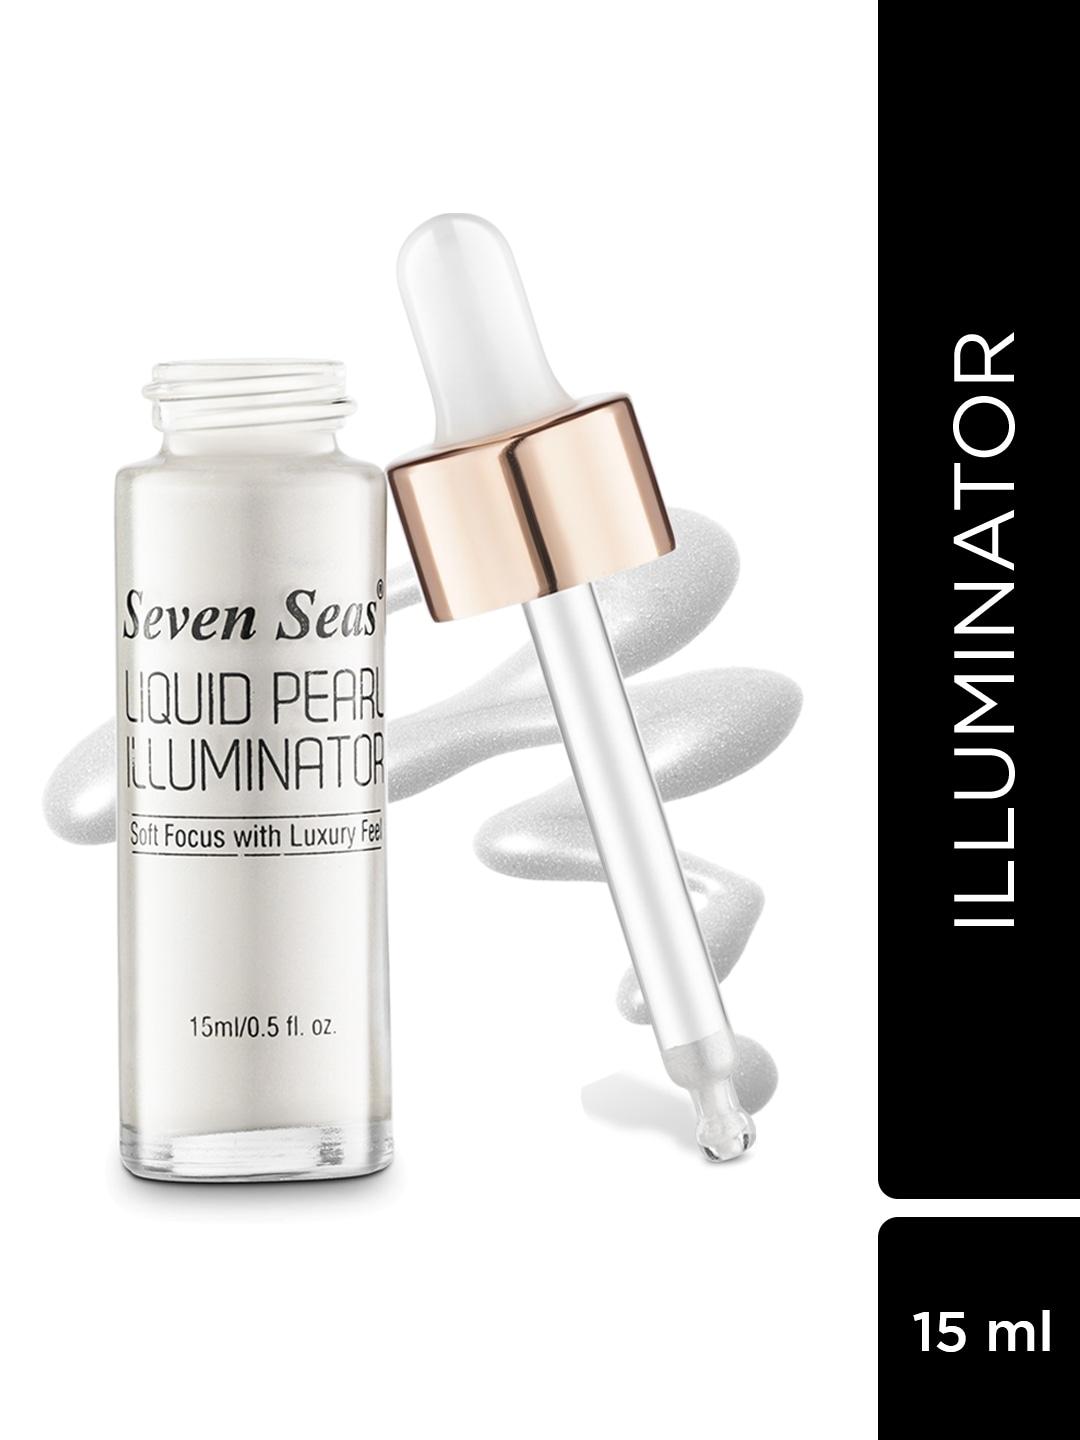 seven seas soft focus liquid pearl illuminator face highlighter 15ml - snow white 102